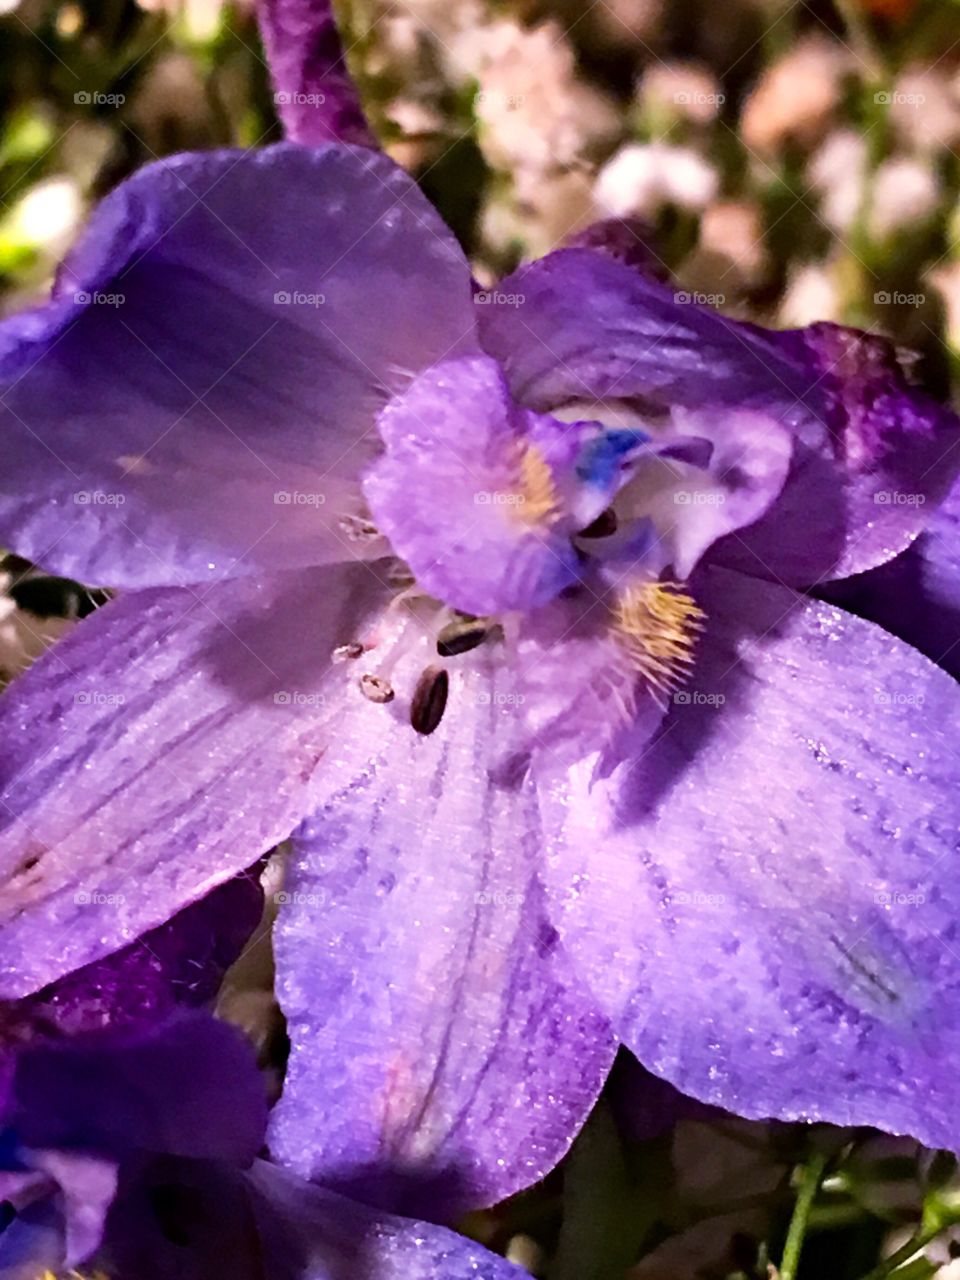 Vibrant purple flower